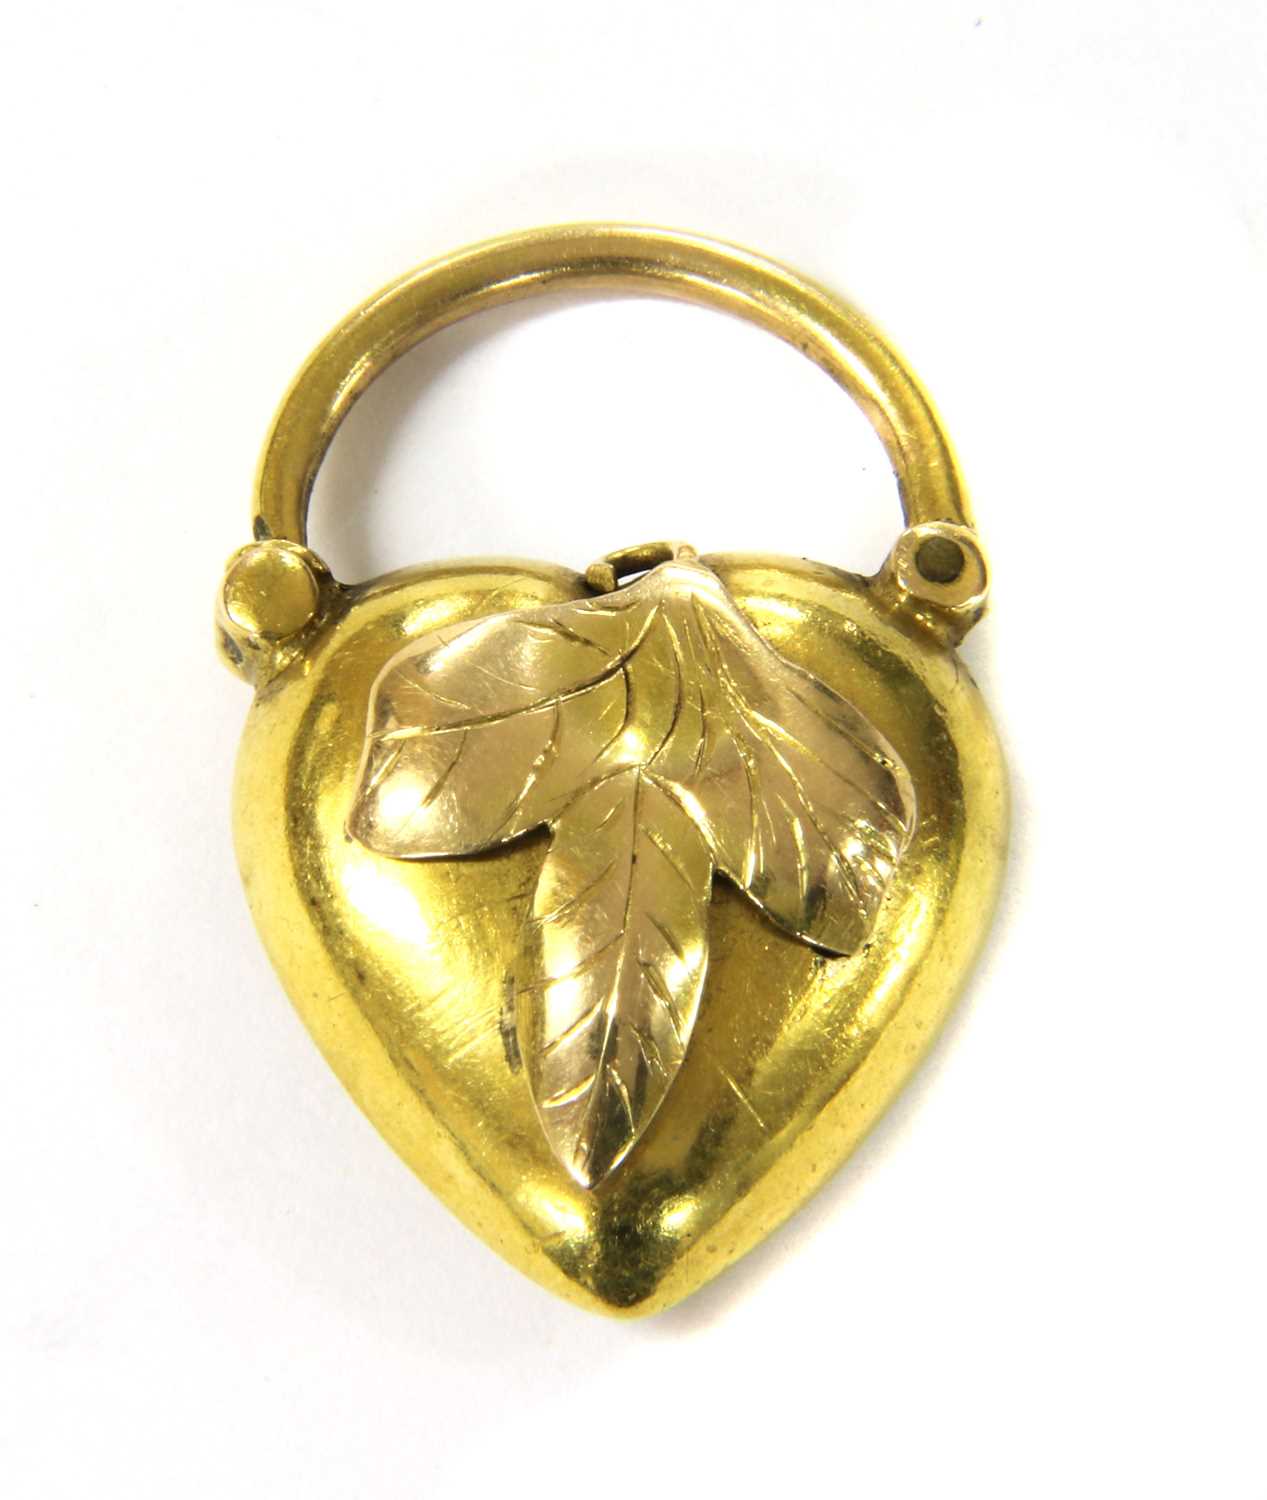 Lot 7 - An Art Nouveau gold heart shaped padlock clasp